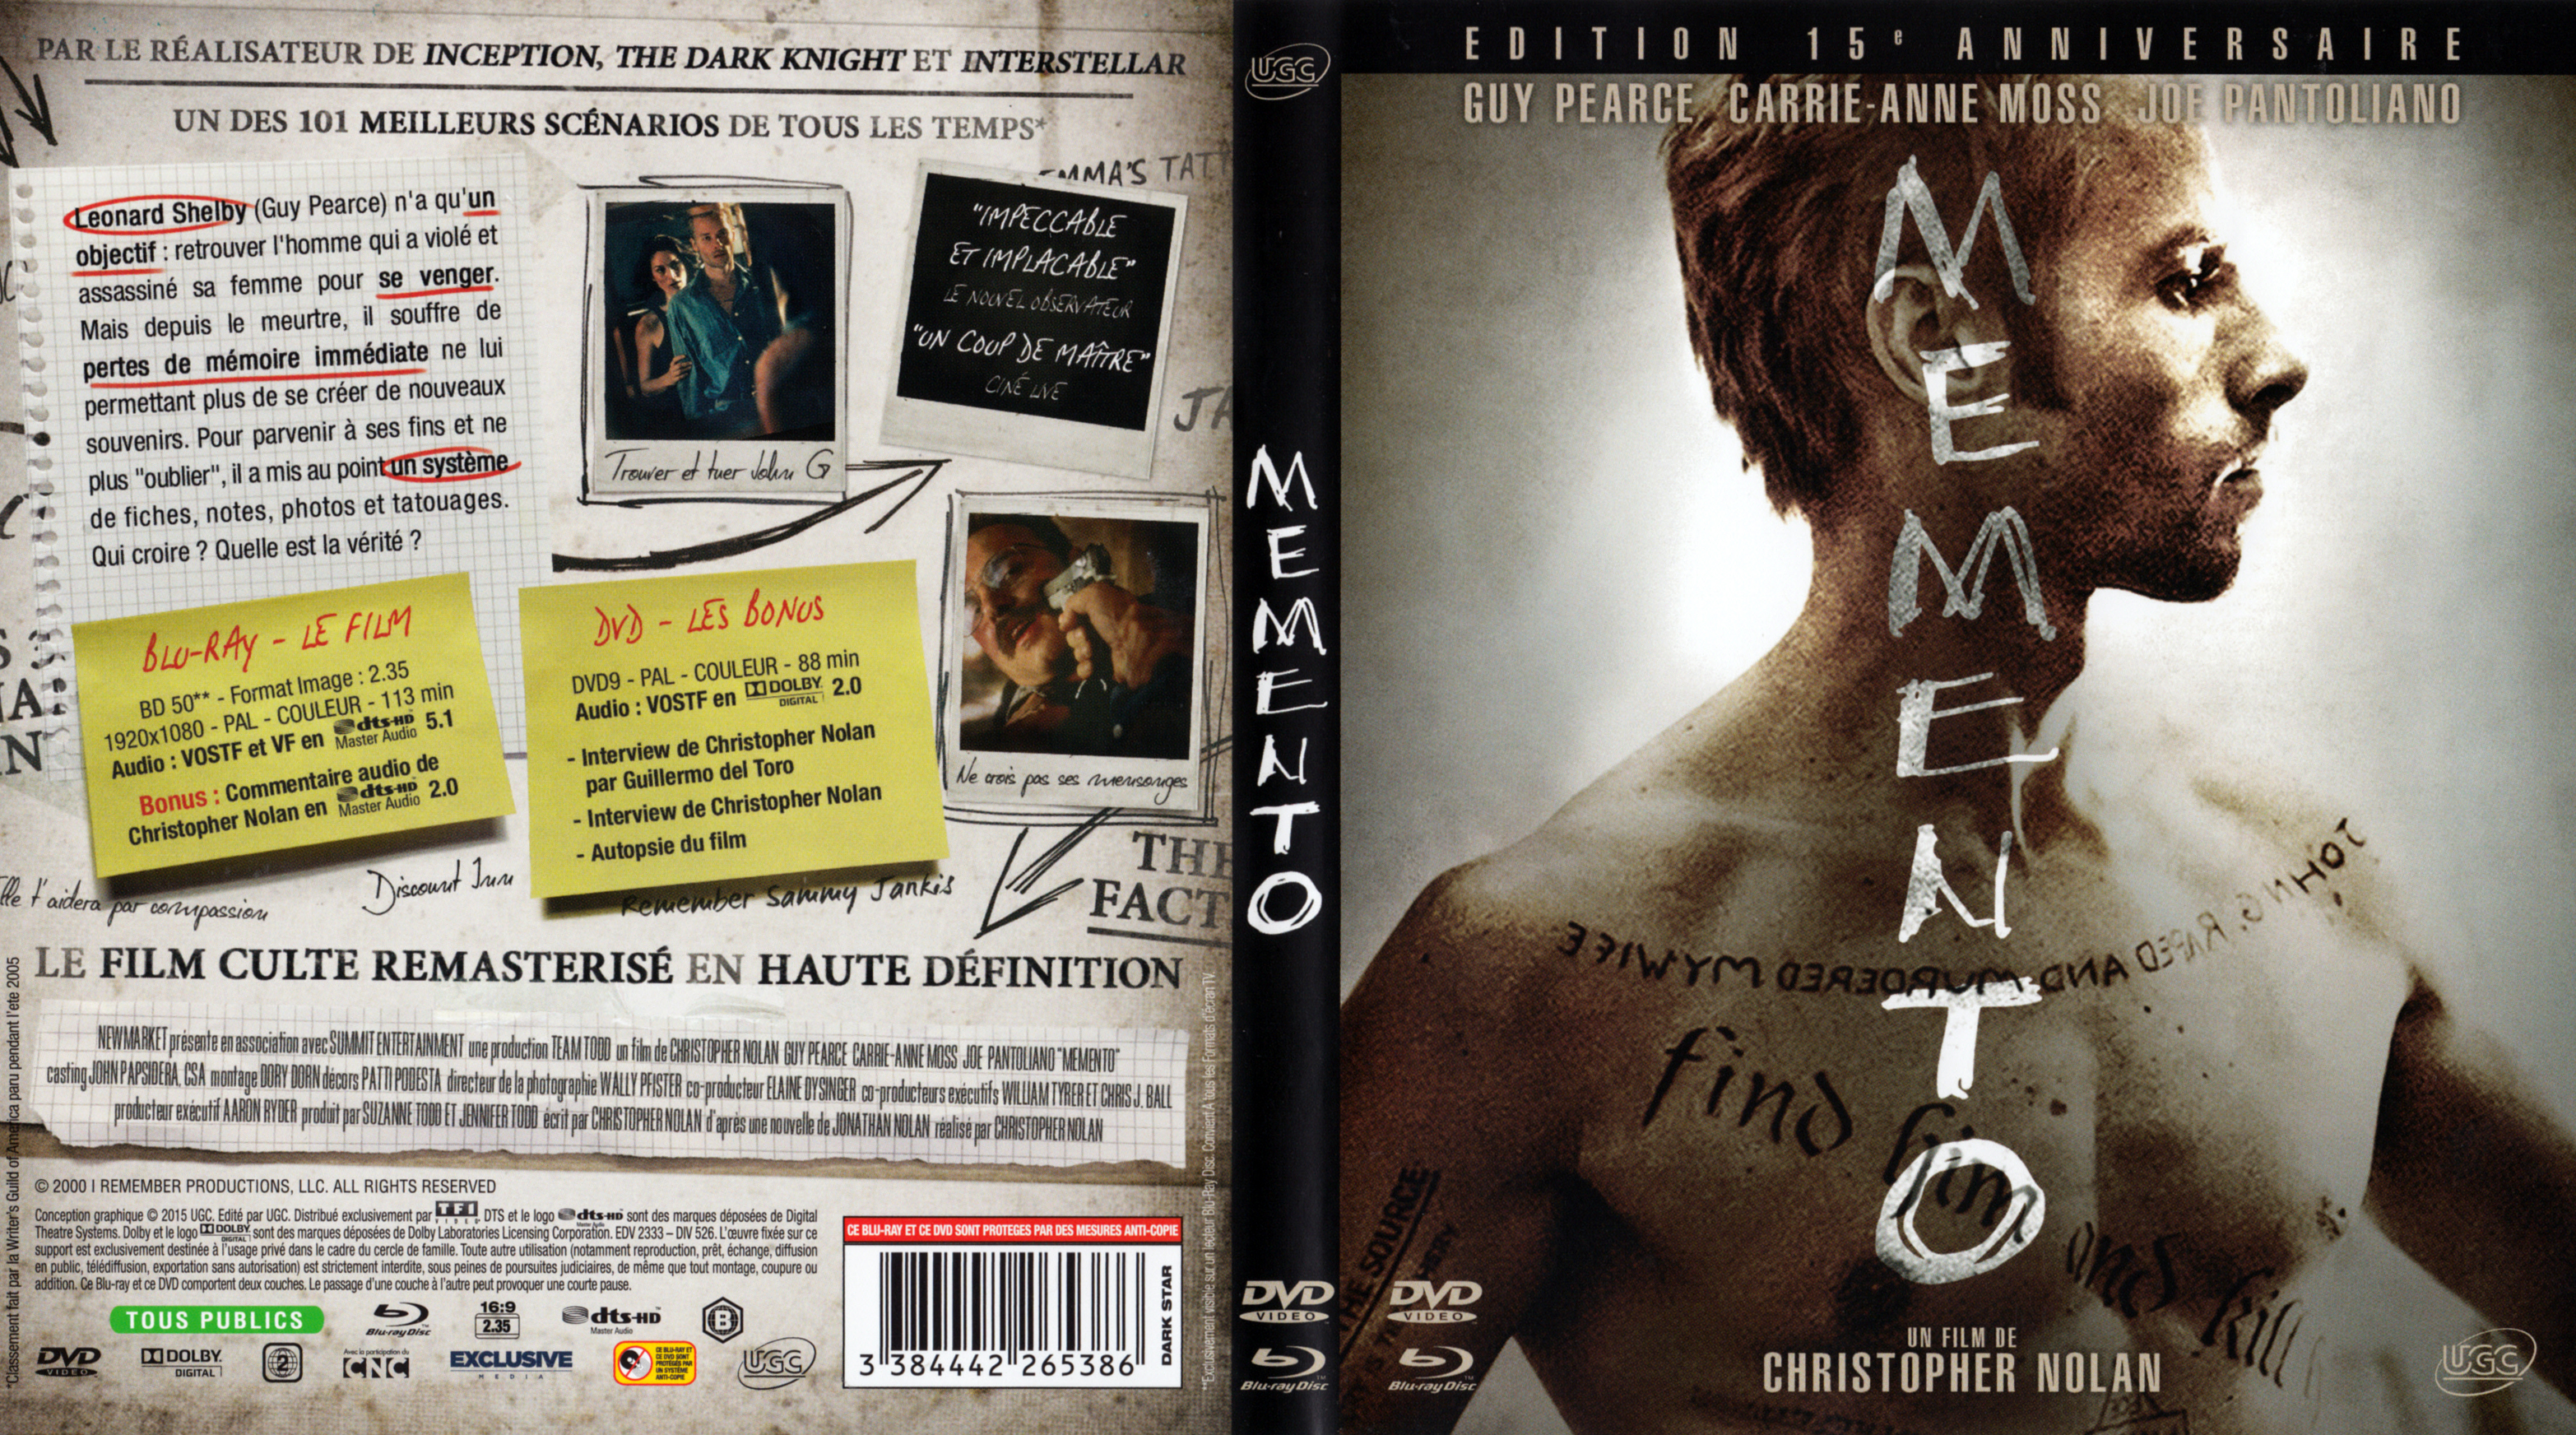 Jaquette DVD Memento (BLU-RAY)